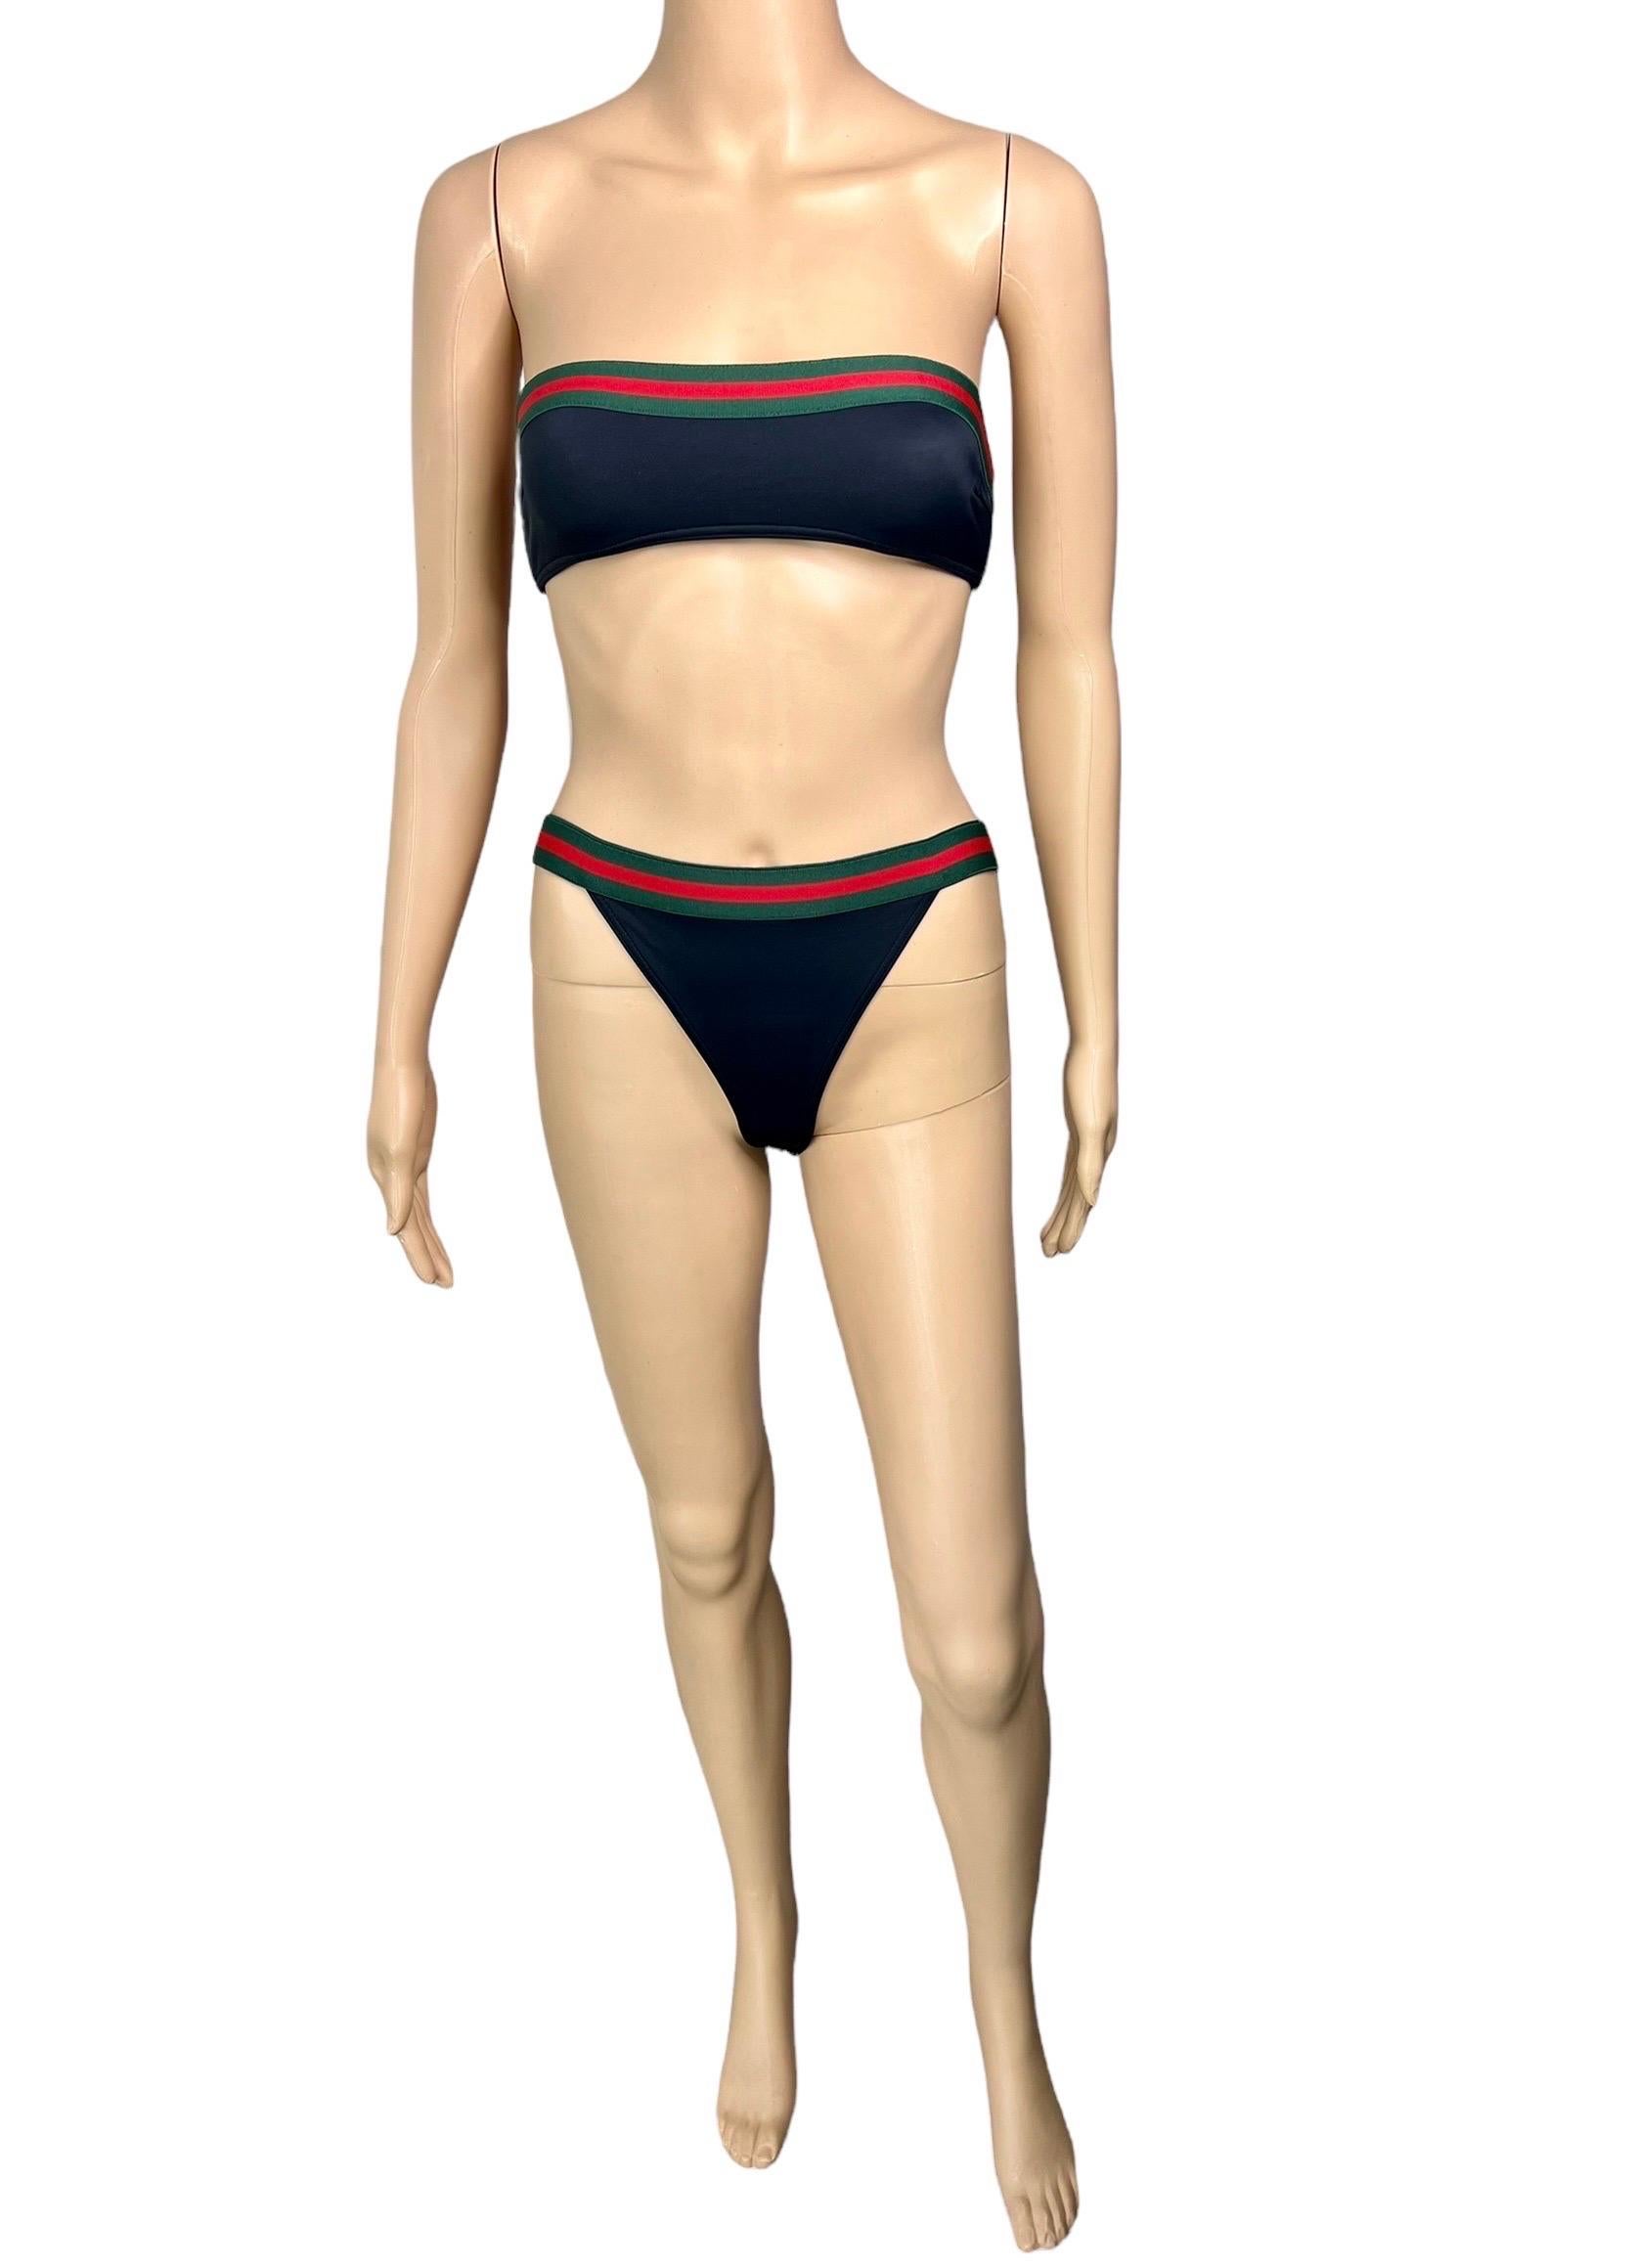 Tom Ford for Gucci S/S 1999 Strapless Bra & Bikini Two-Piece Swimwear Swimsuit For Sale 1